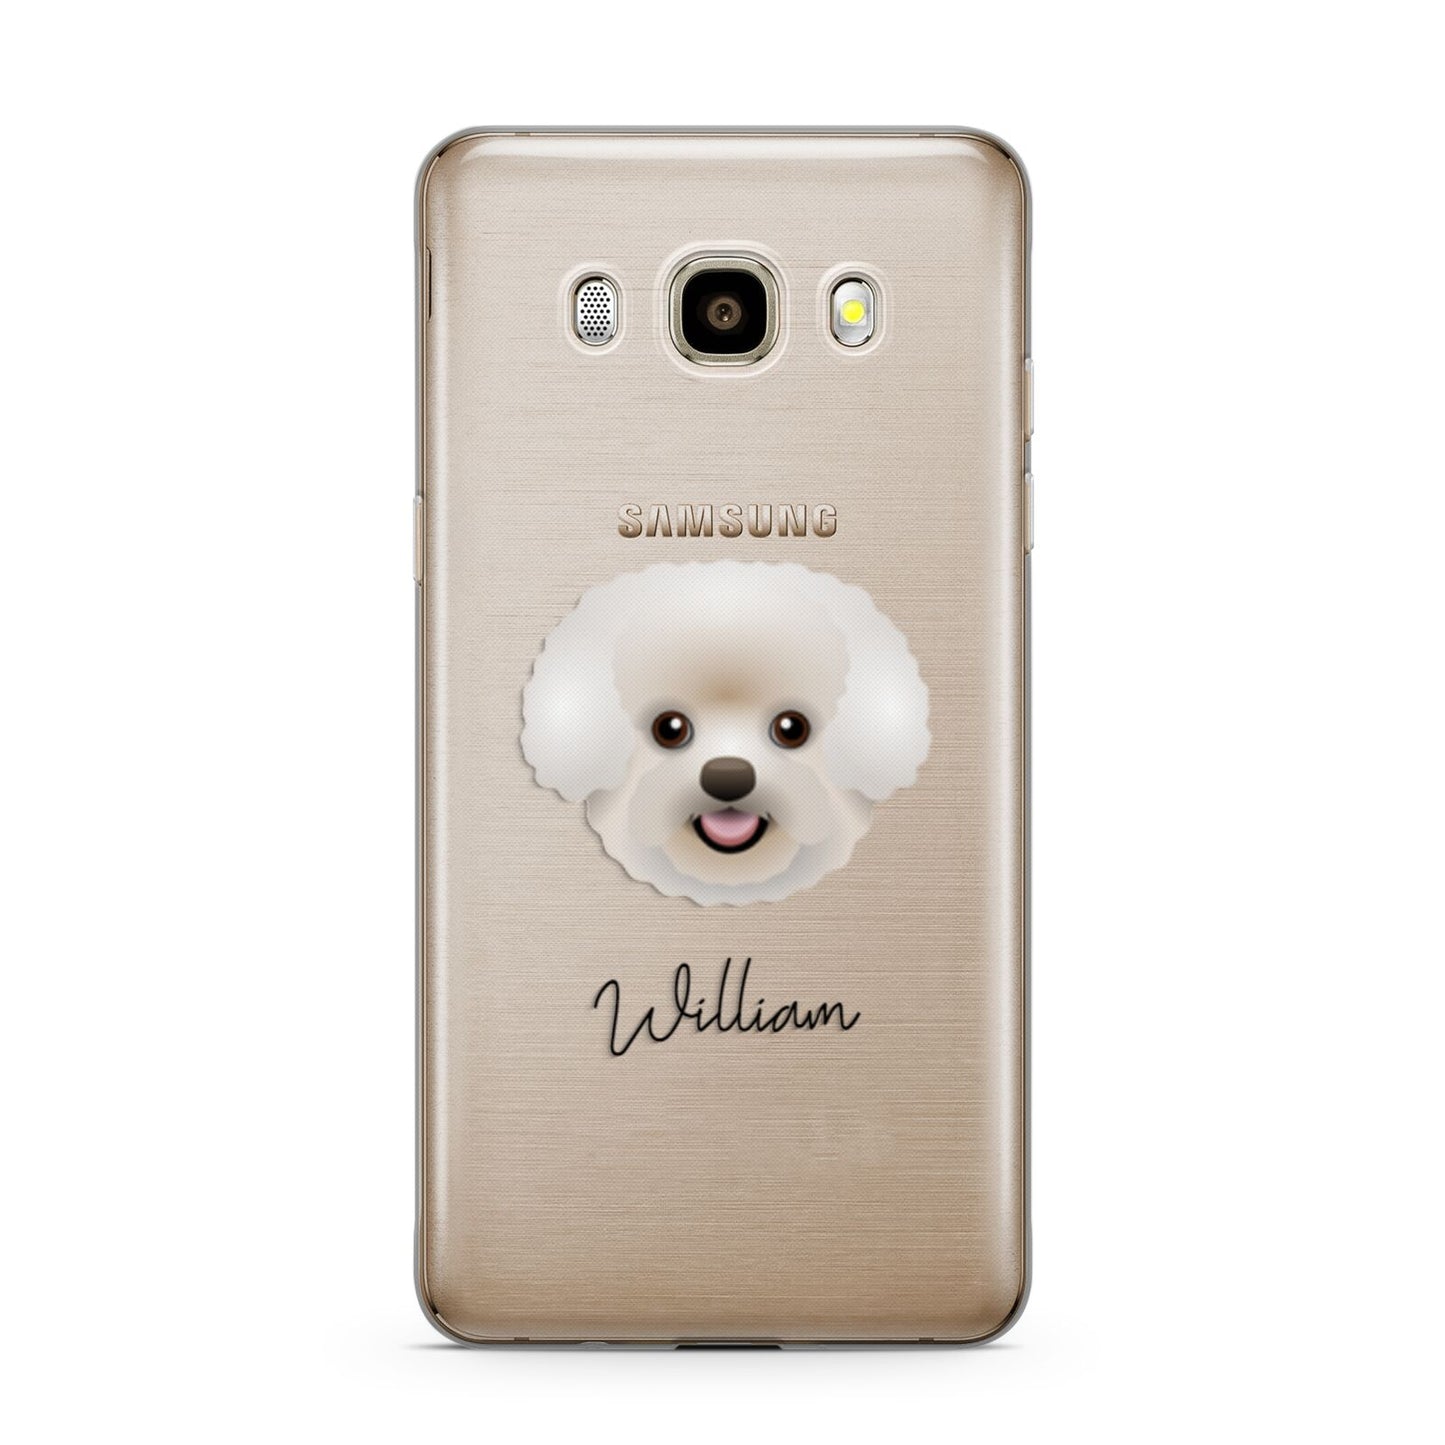 Bichon Frise Personalised Samsung Galaxy J7 2016 Case on gold phone